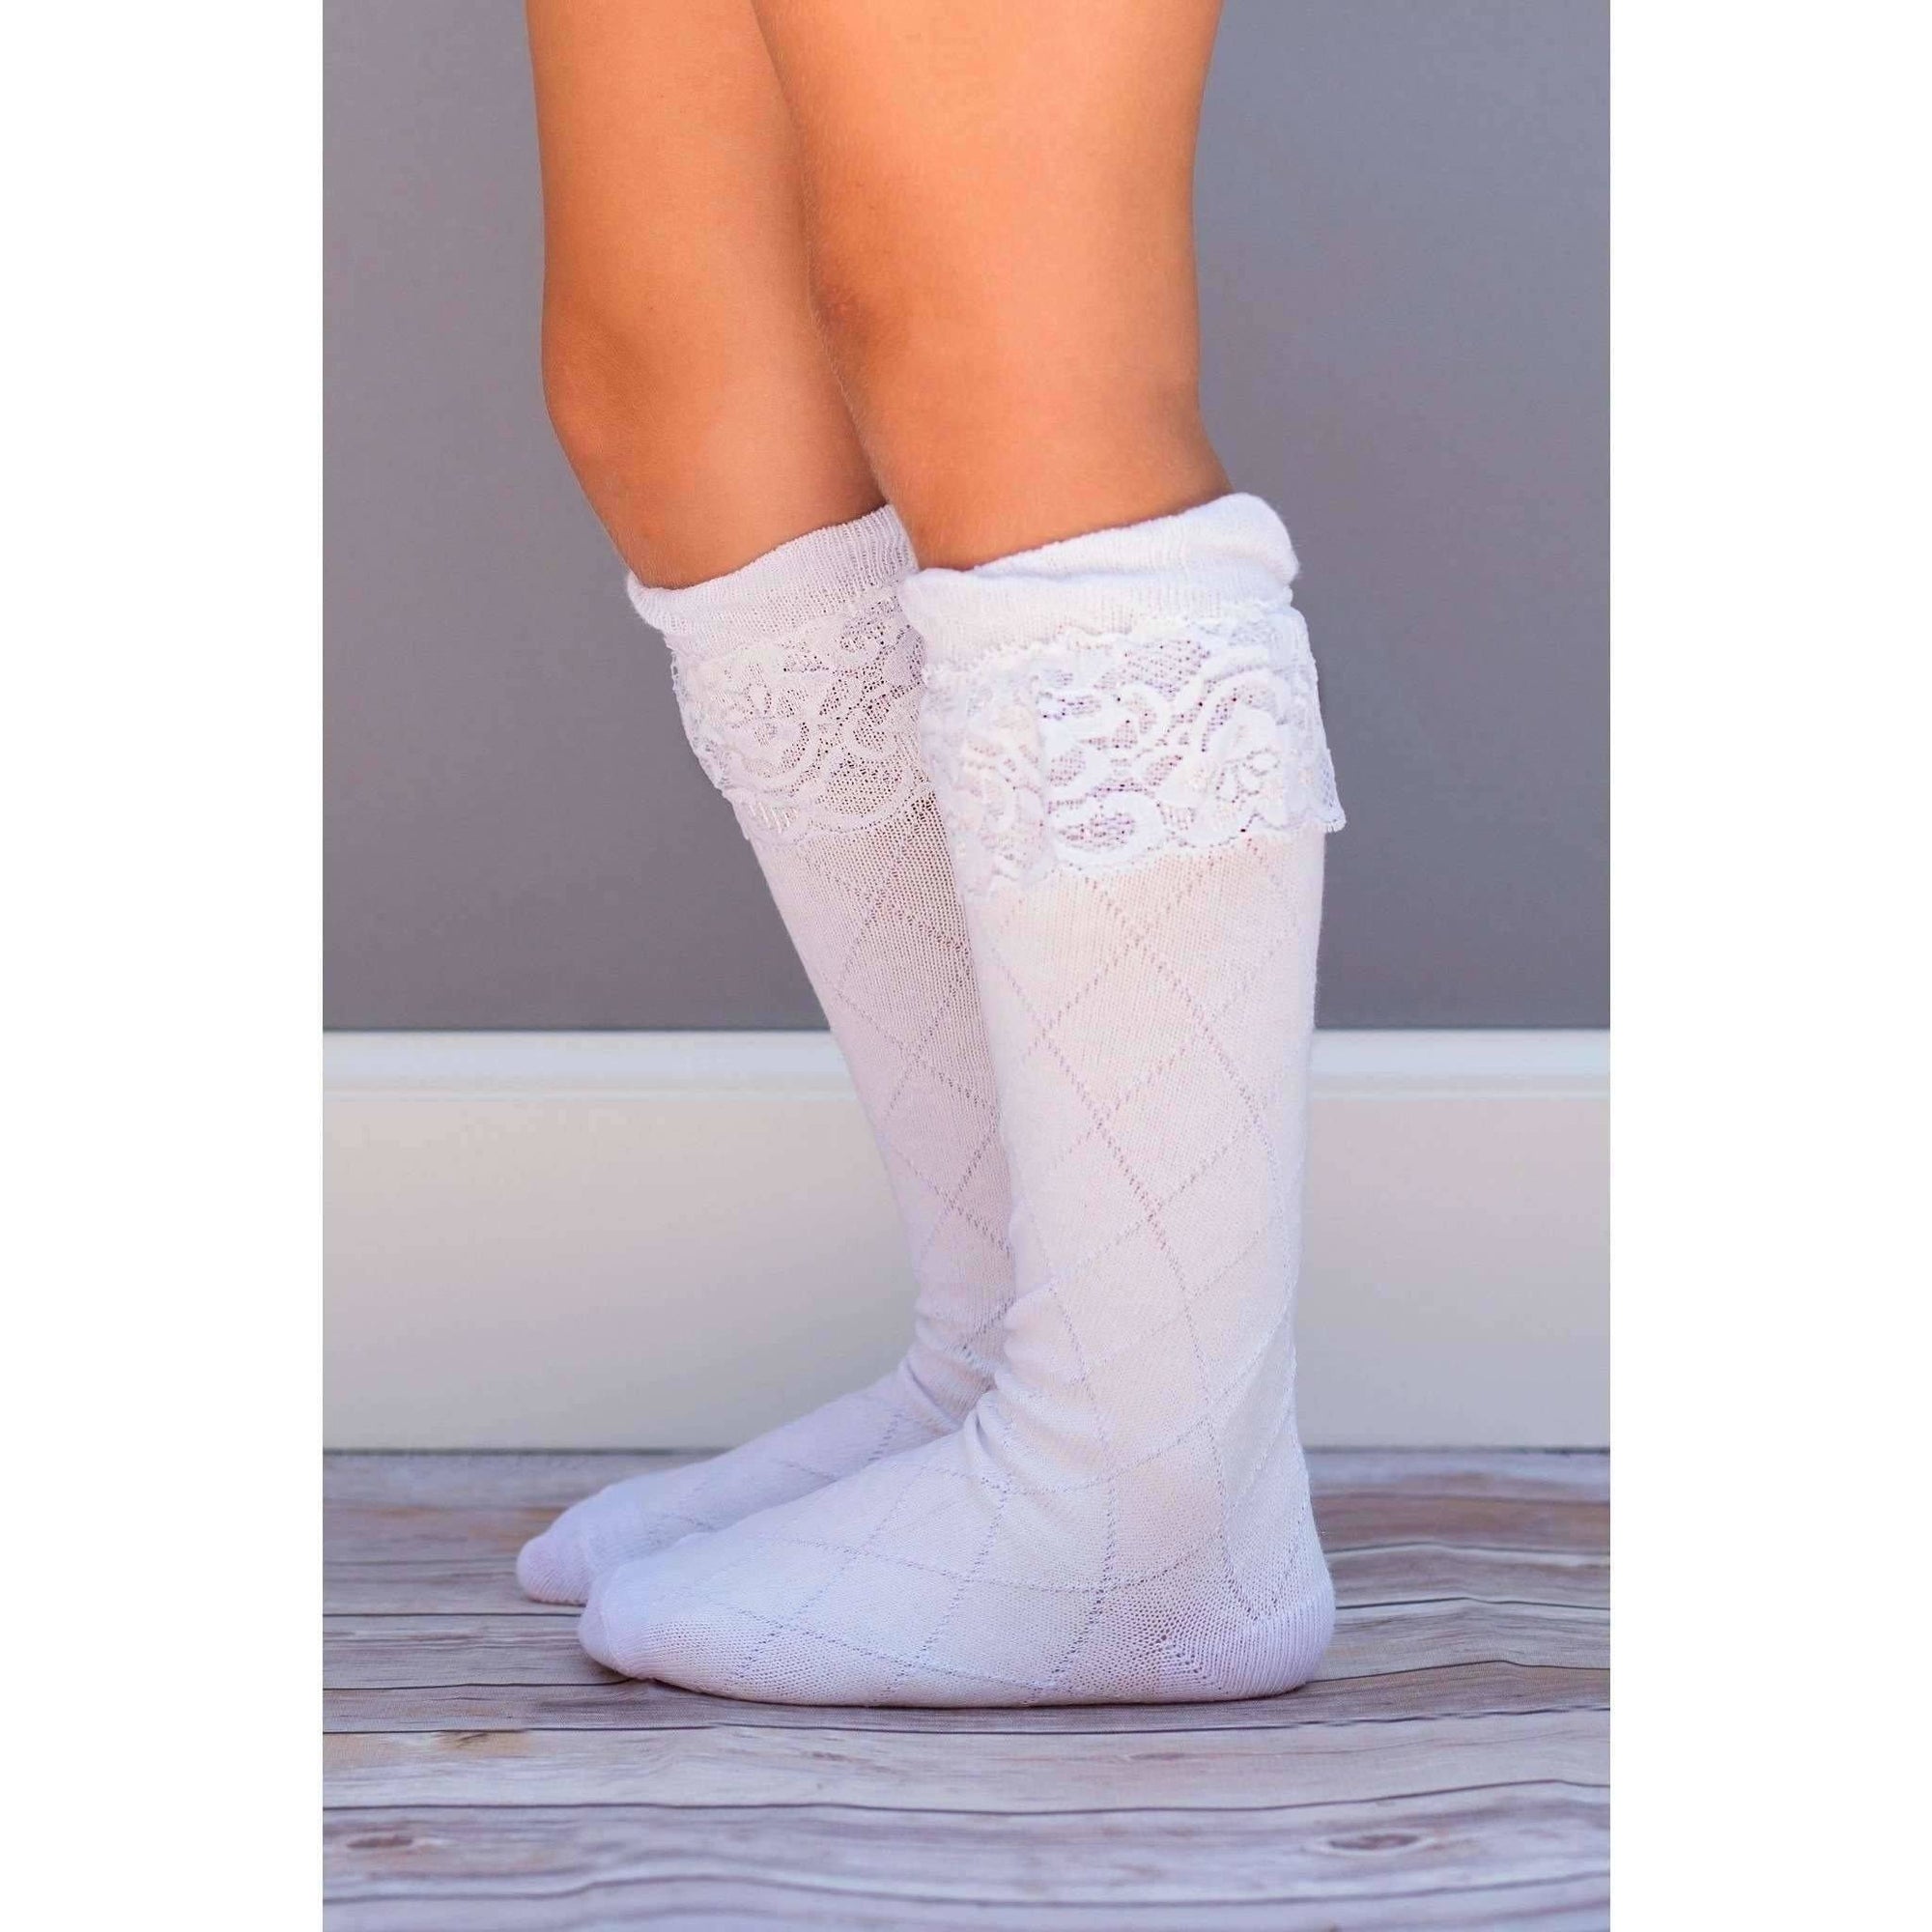 Lace Knee Socks - Adorable Essentials, LLC 